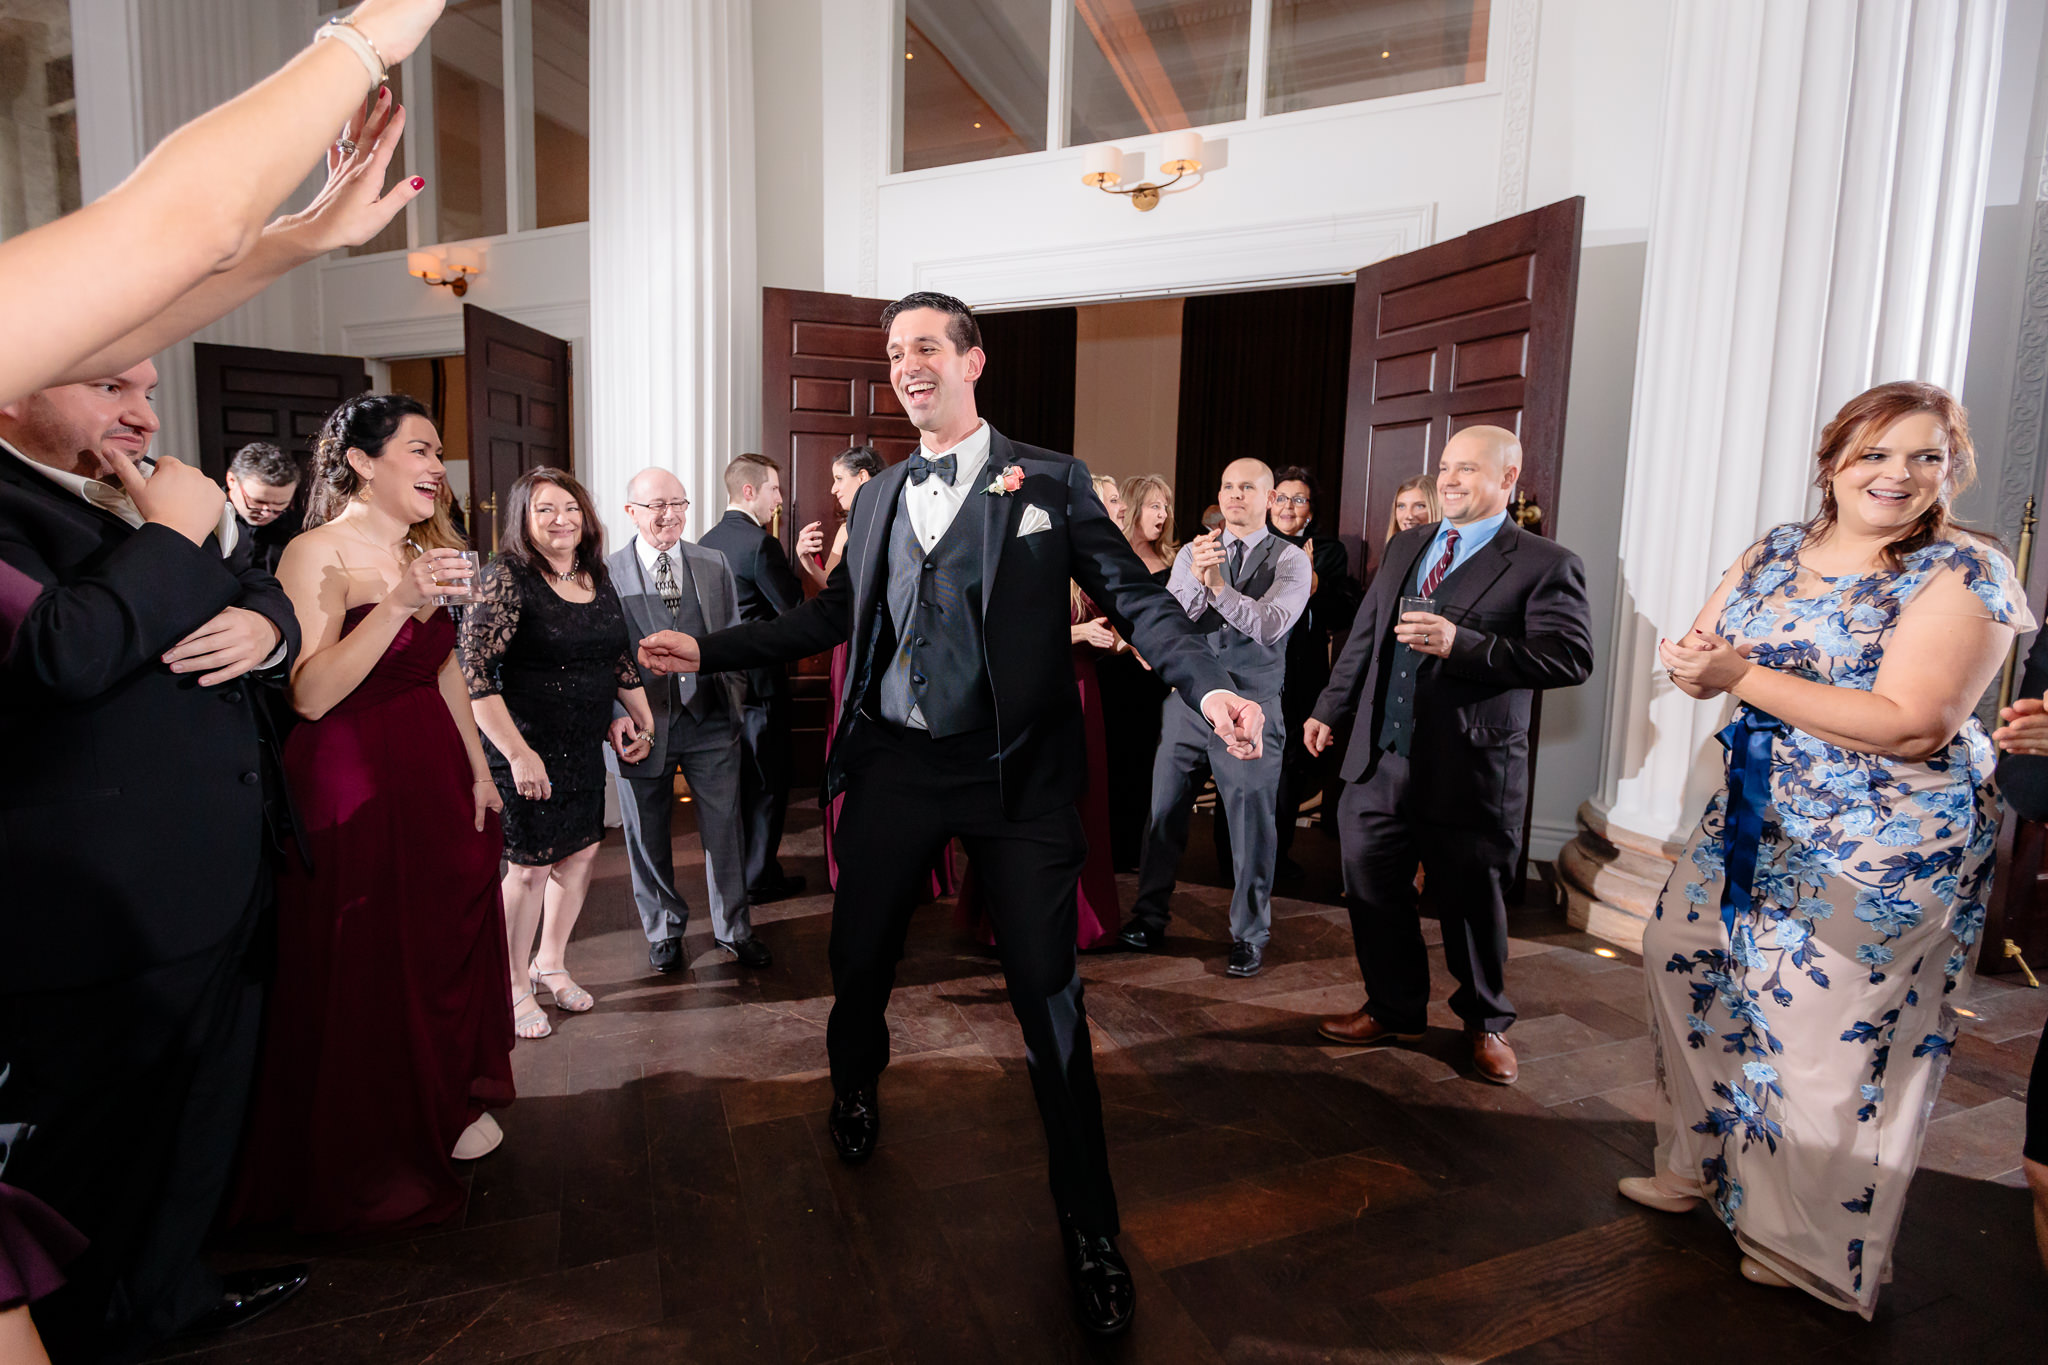 Groomsman dances at a wedding reception at Pittsburgh's Hotel Monaco